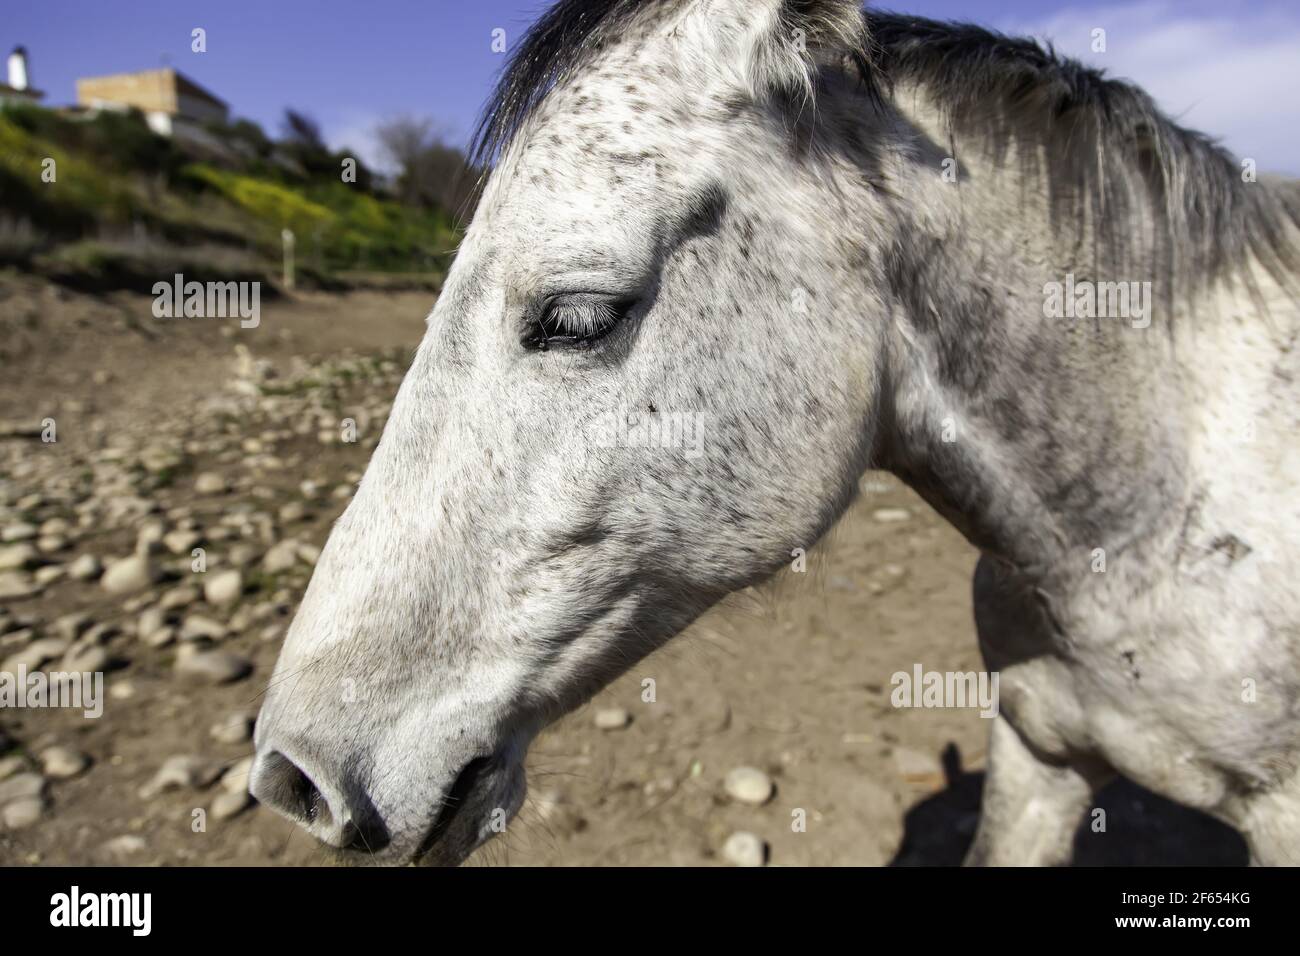 White horse in stable, wild mammal animals Stock Photo